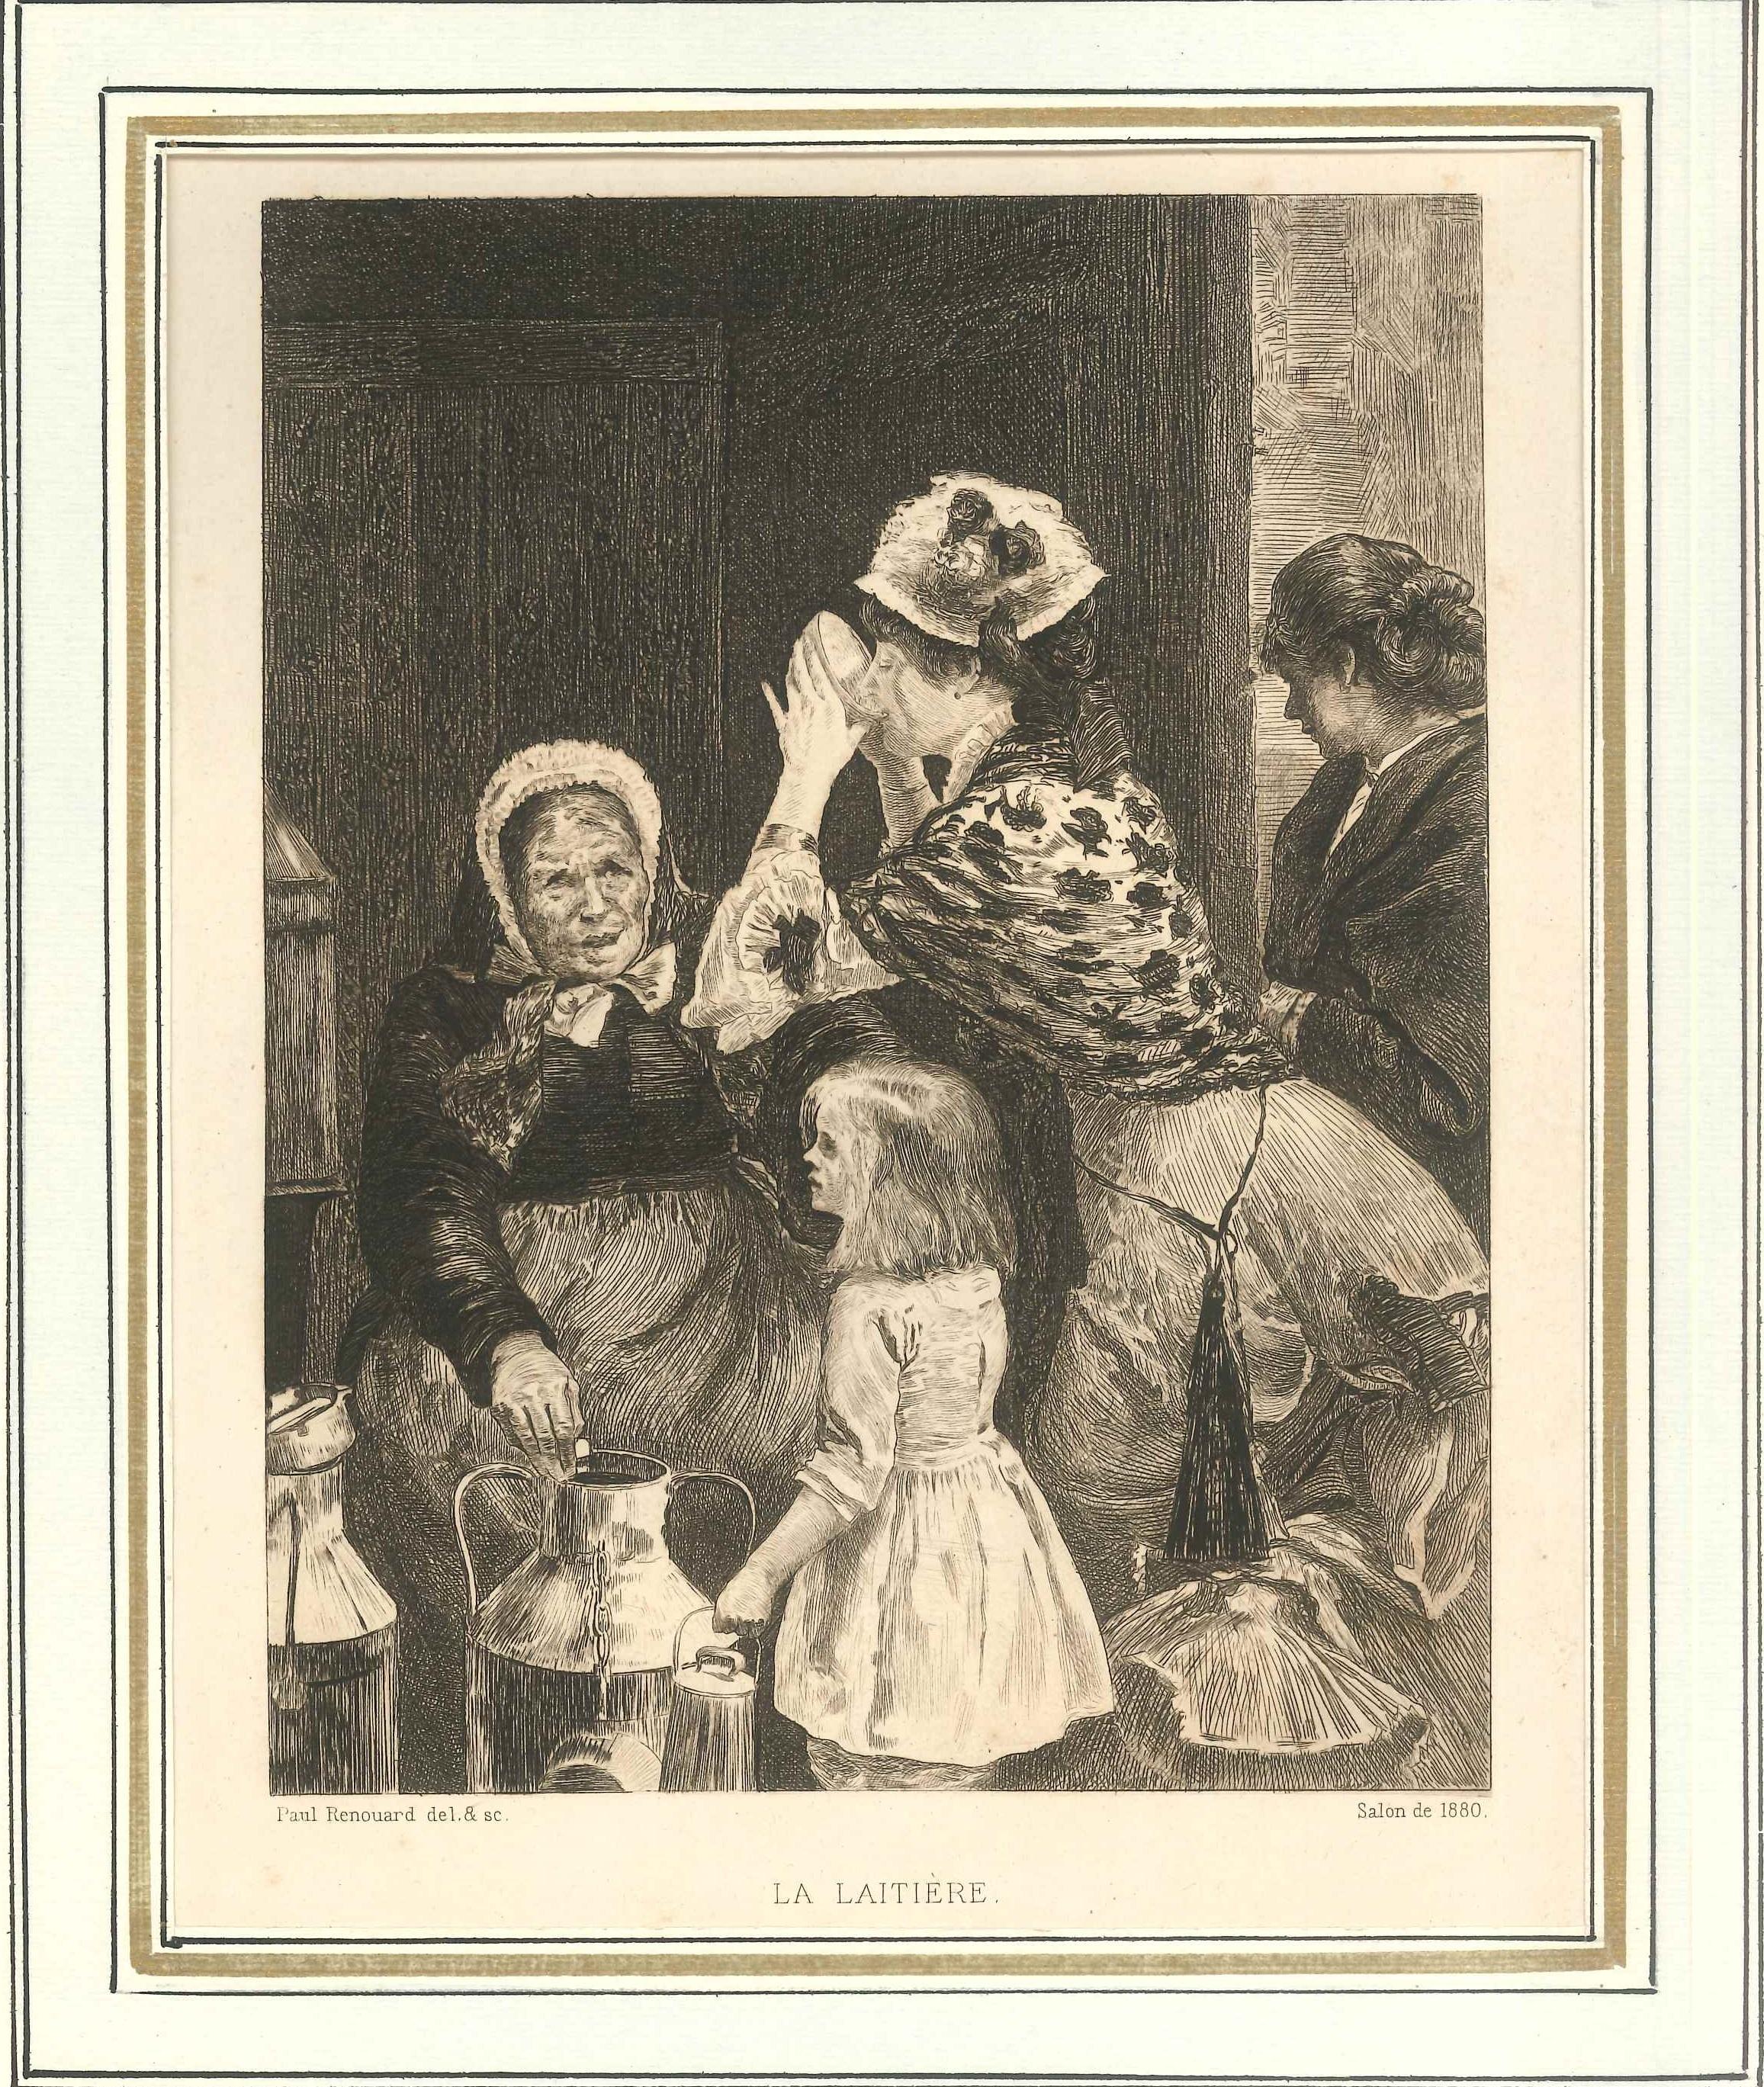 Charles Paul Renouard Figurative Print - La Laitière - Original Etching and Drypoint by C.P. Renouard - 1880